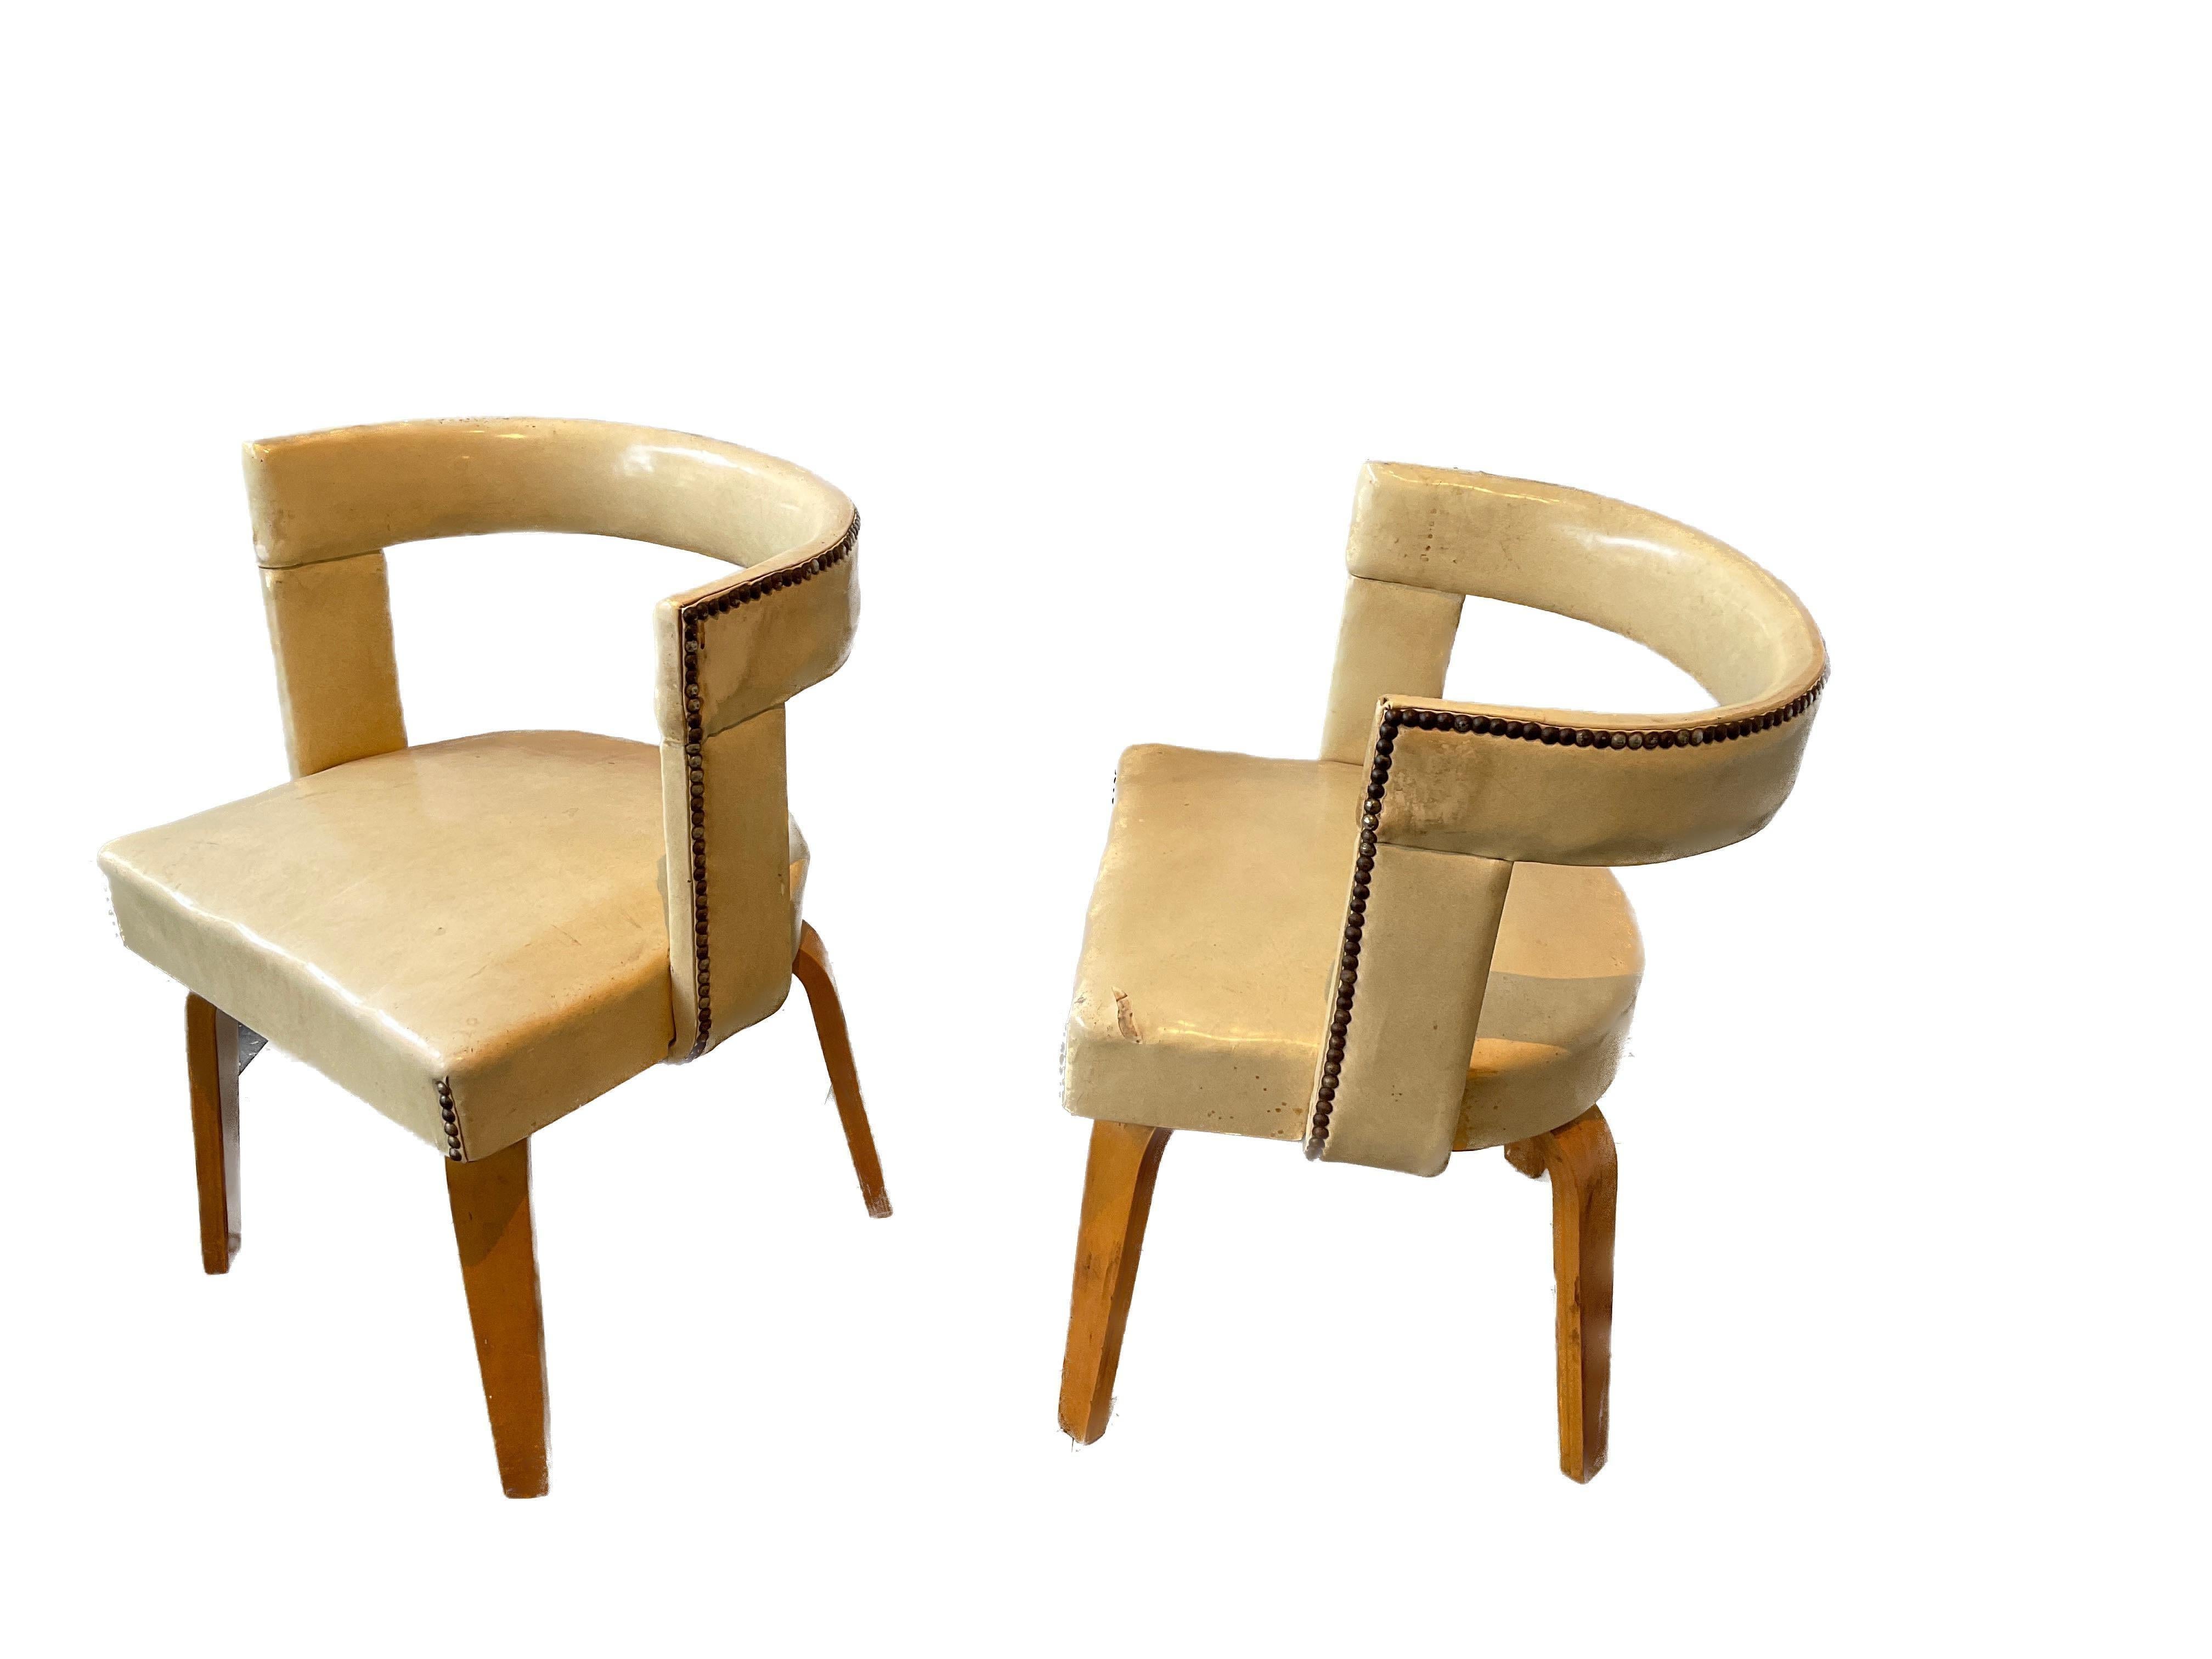 Pair of 1950s Thonet chairs.